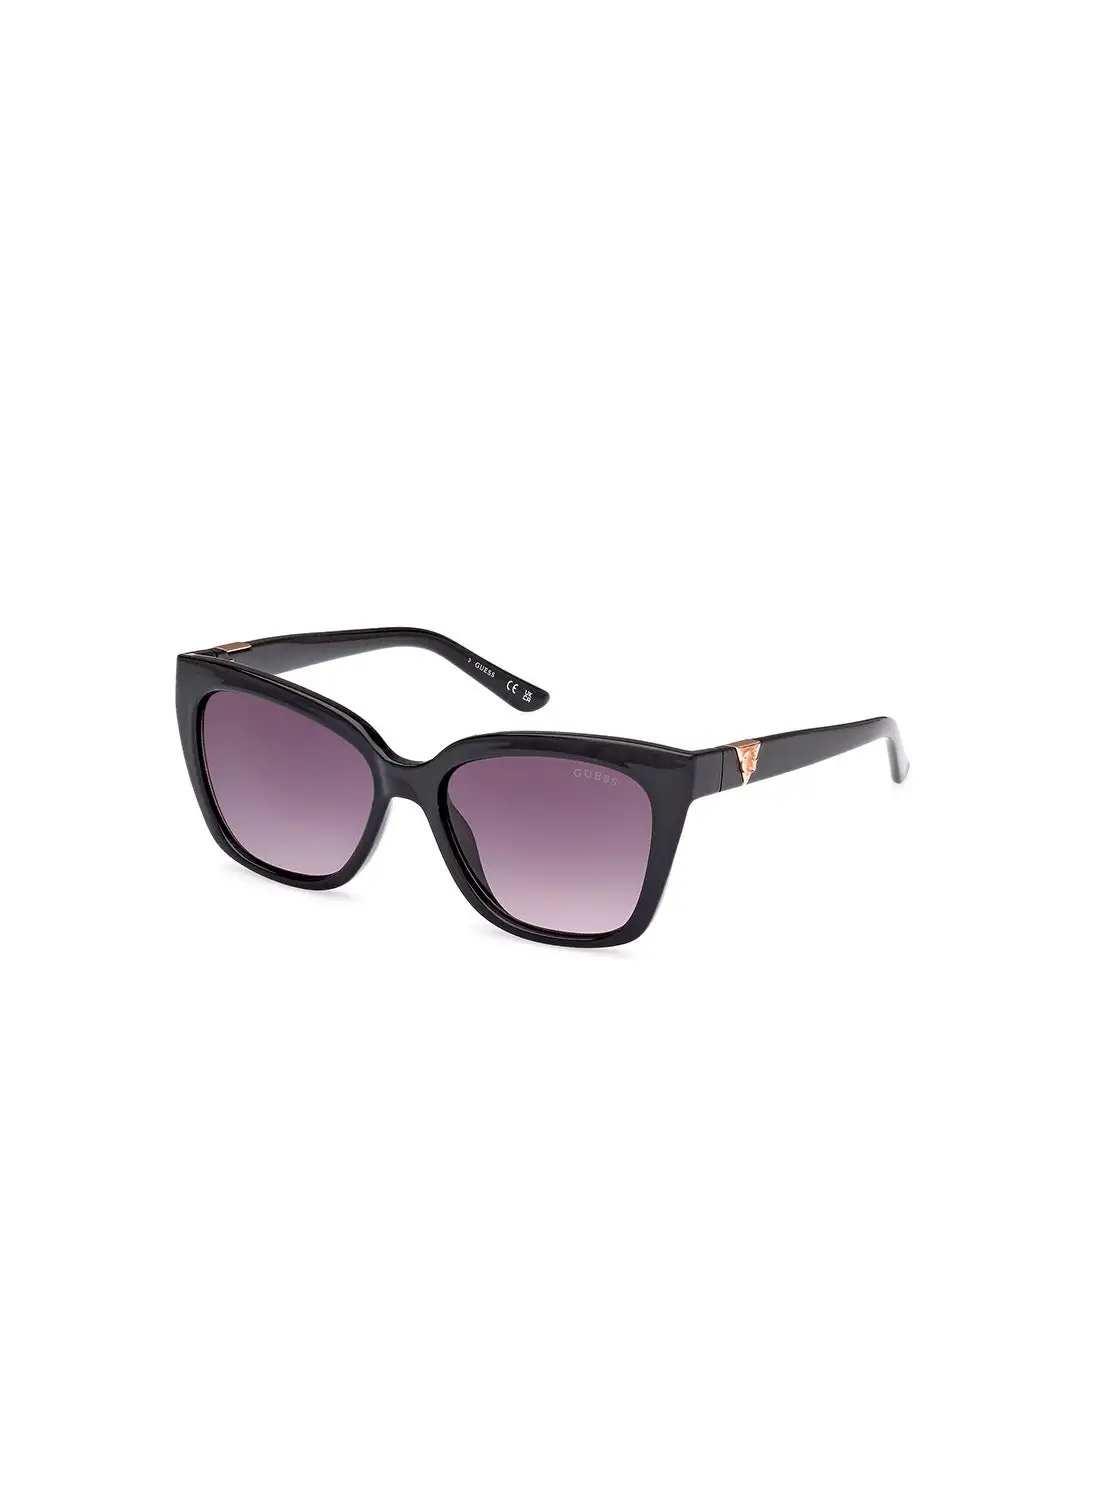 GUESS Women's UV Protection Square Sunglasses - GU787801B53 - Lens Size: 53 Mm